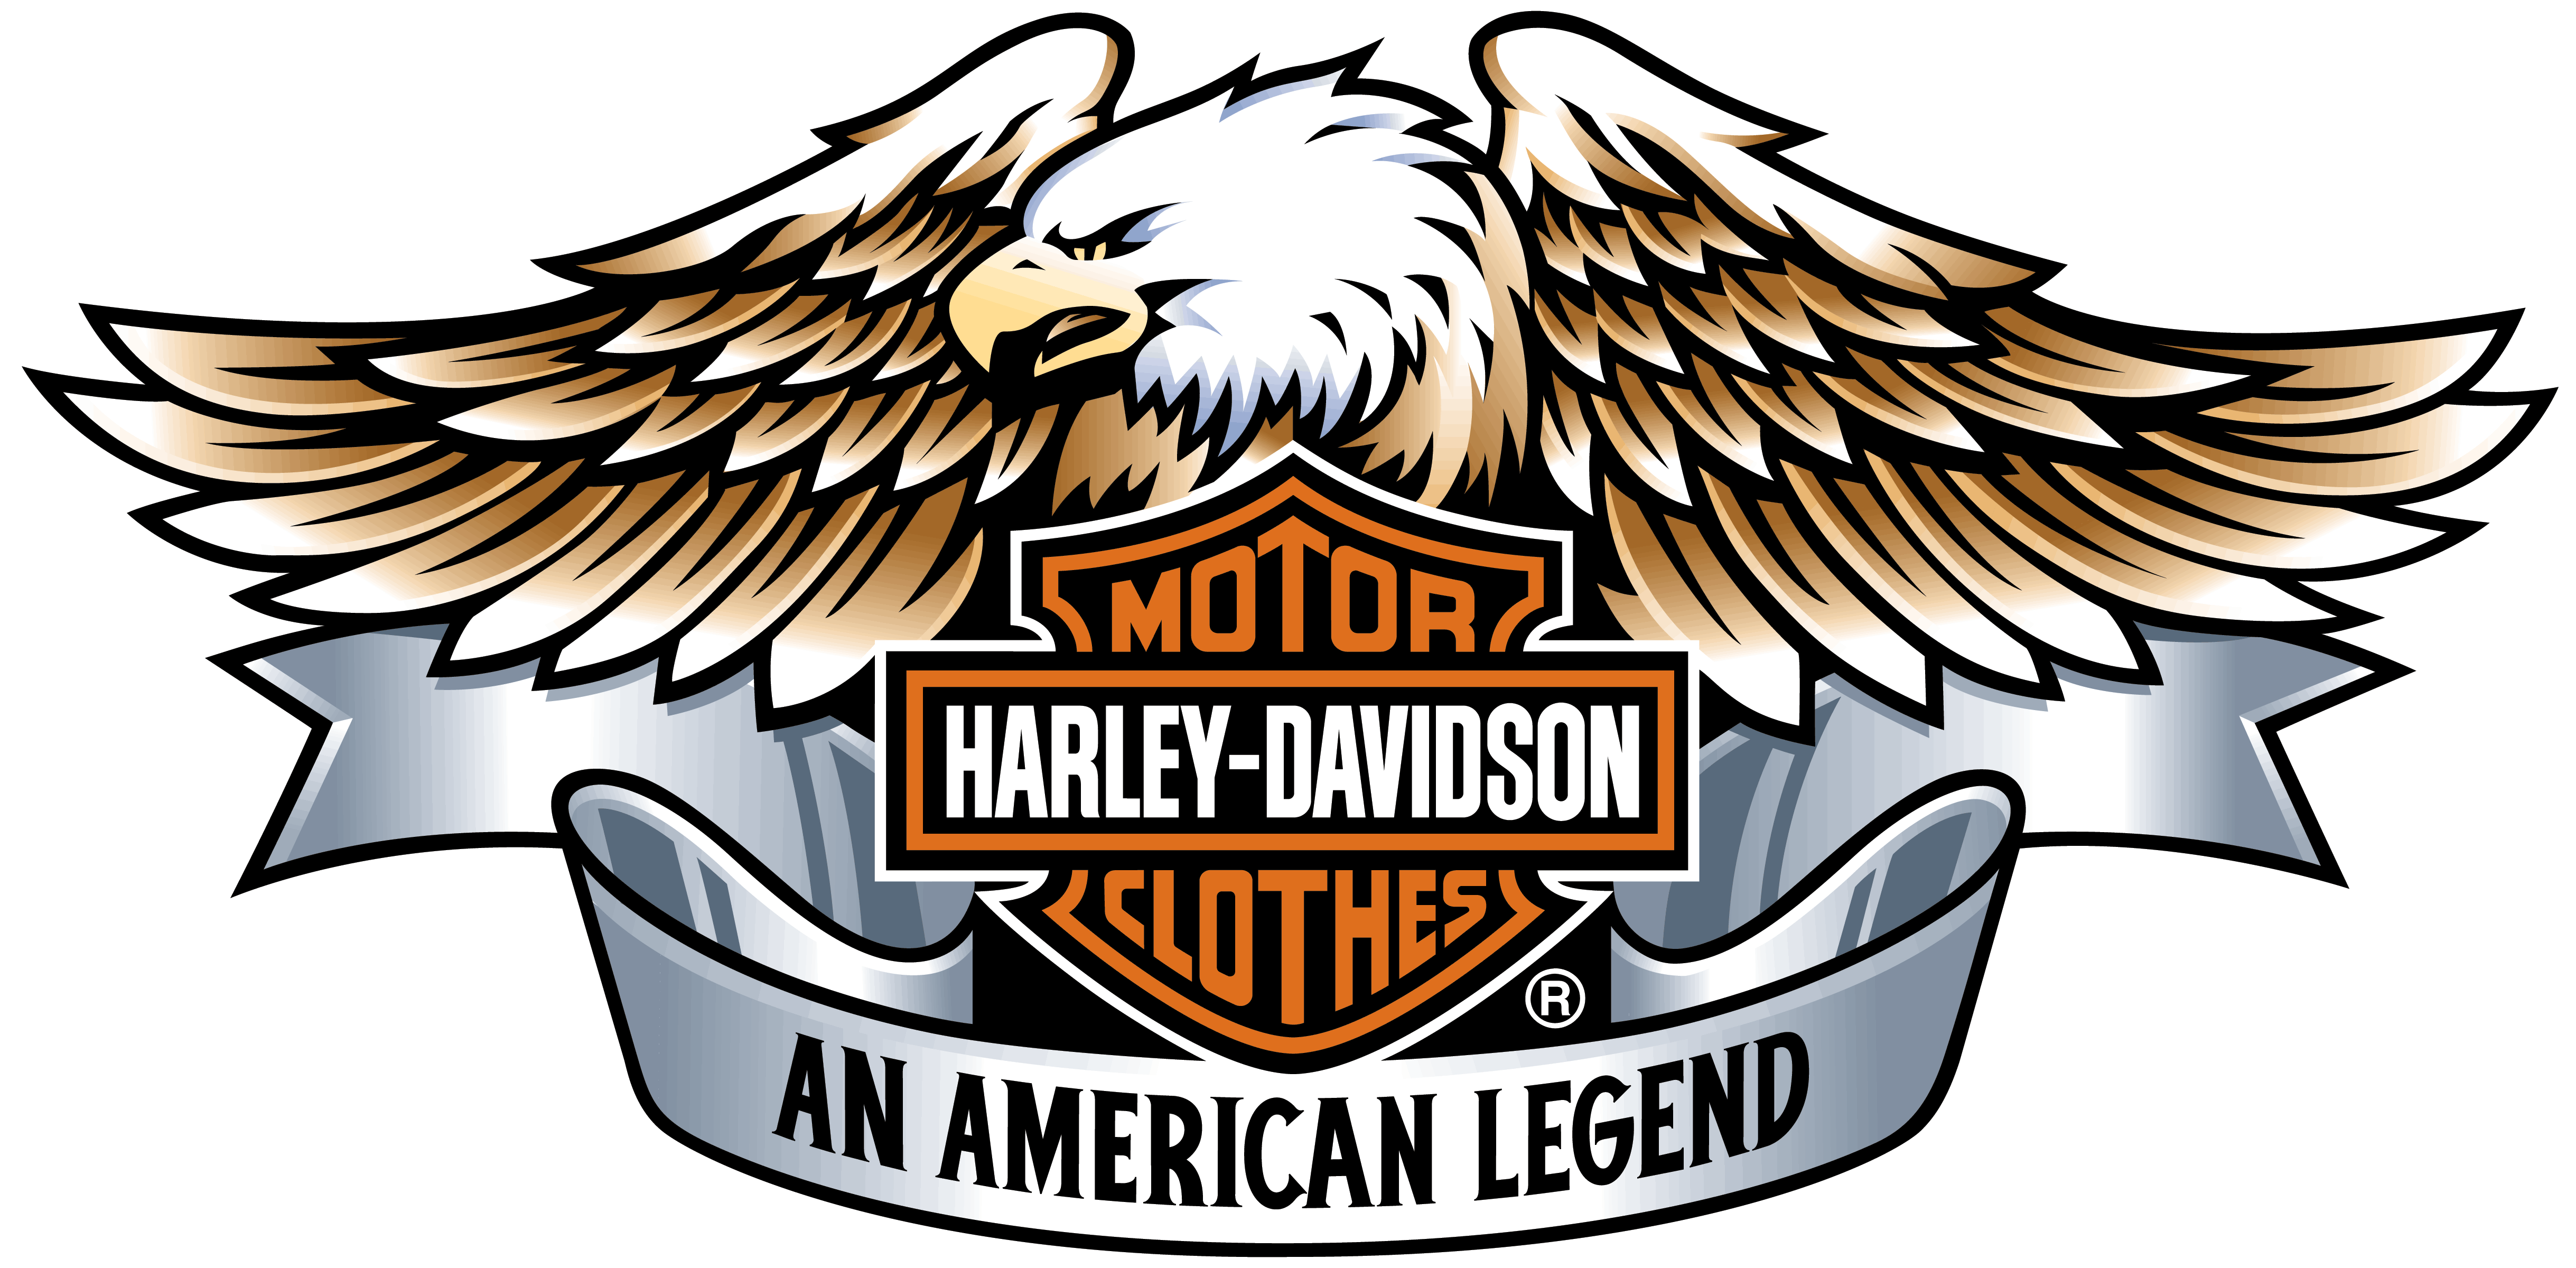 Harley Davidson Emblem | Wallpapers 2014 | Wallpapers 2014